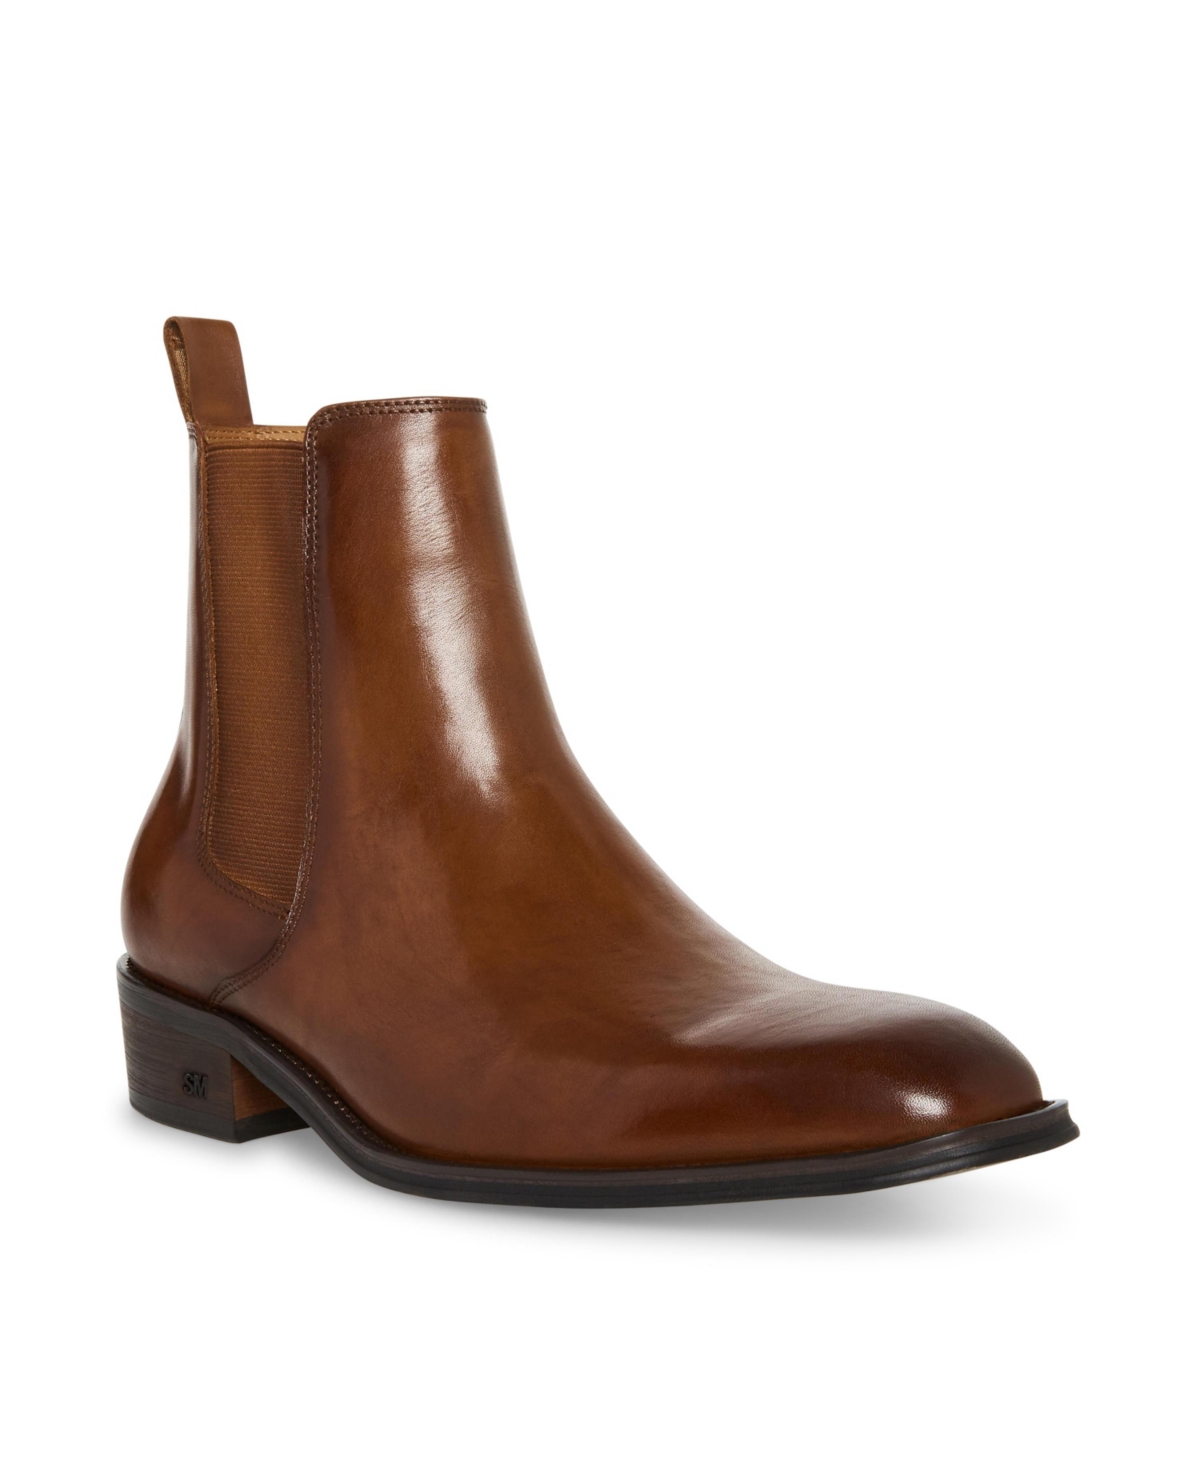 Men's Hamlin Pull-On Boots - Tan Leather